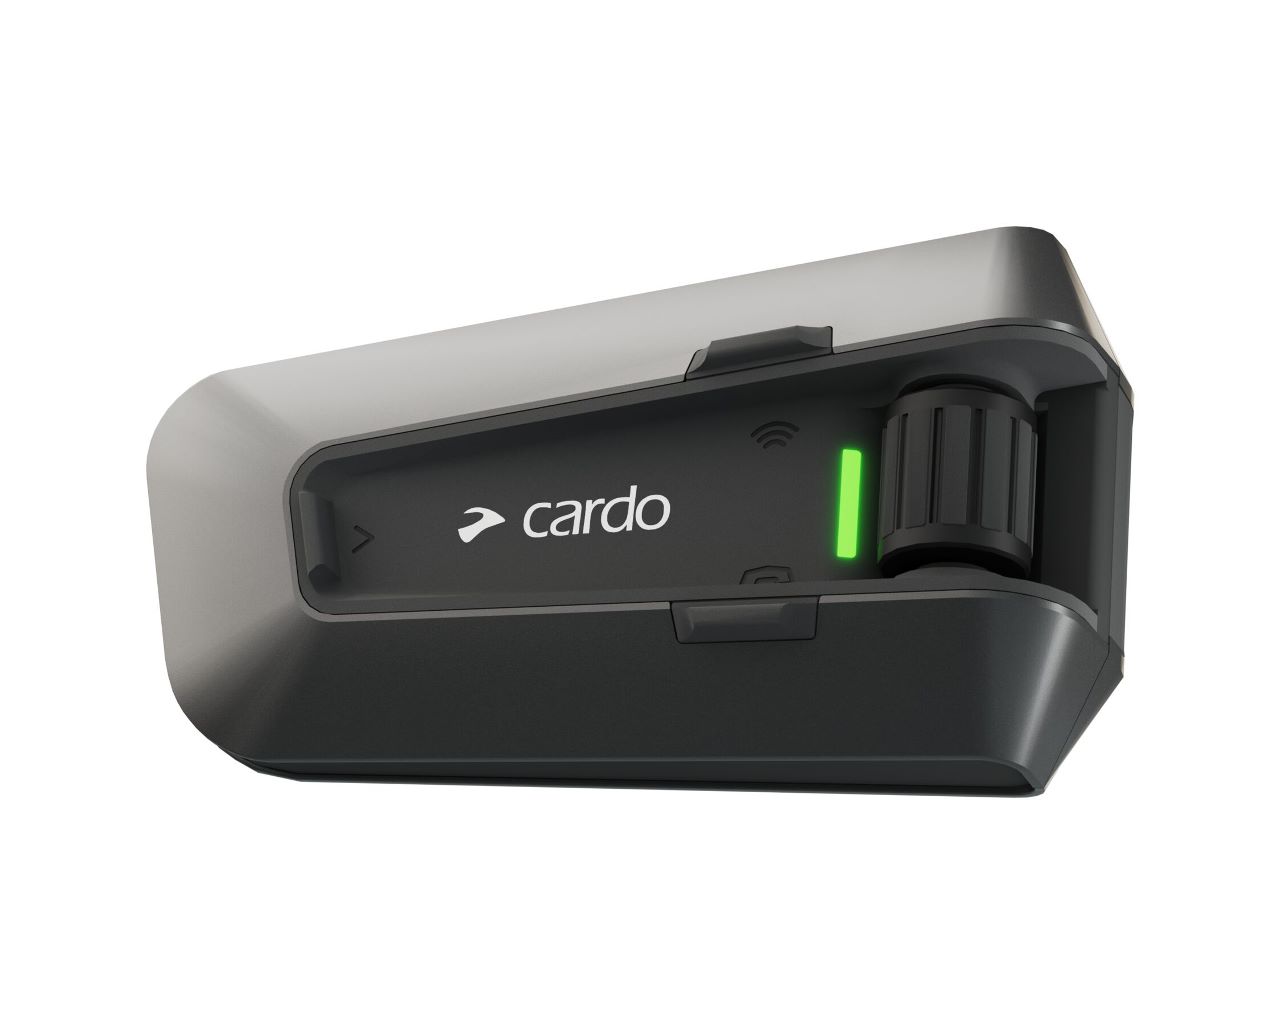 Cardo Packtalk Edge Bluetooth Mesh Headset Single  PT200001 71-5044